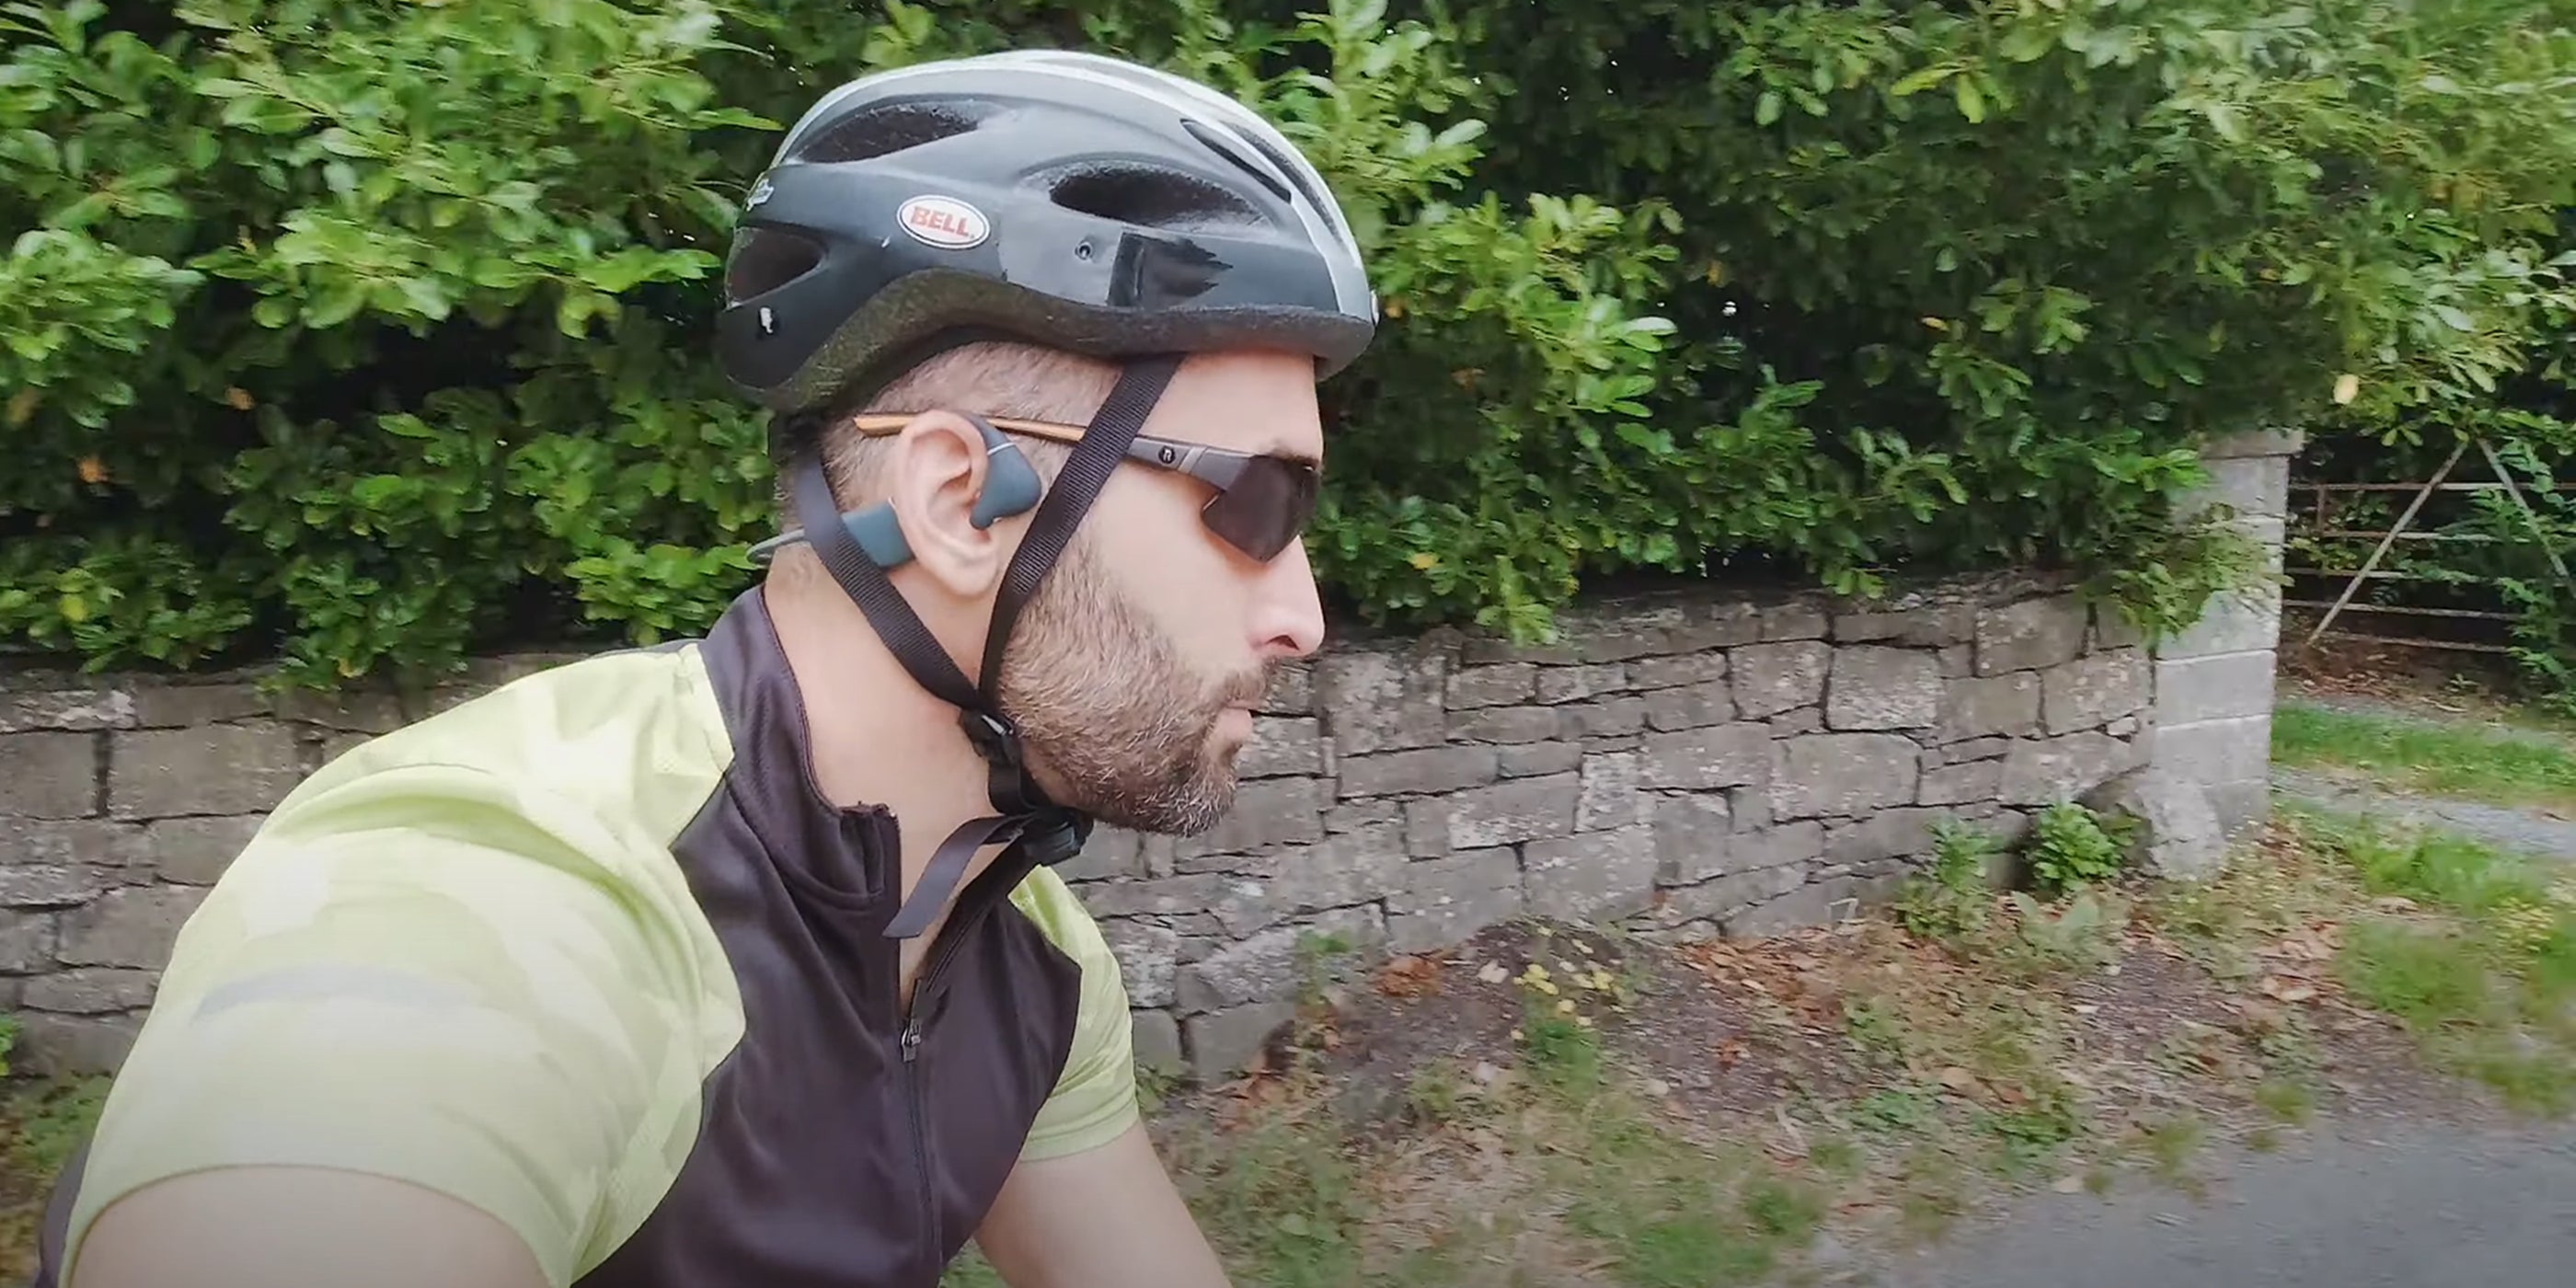 A cyclist is riding a bike wearing bone conduction headphones